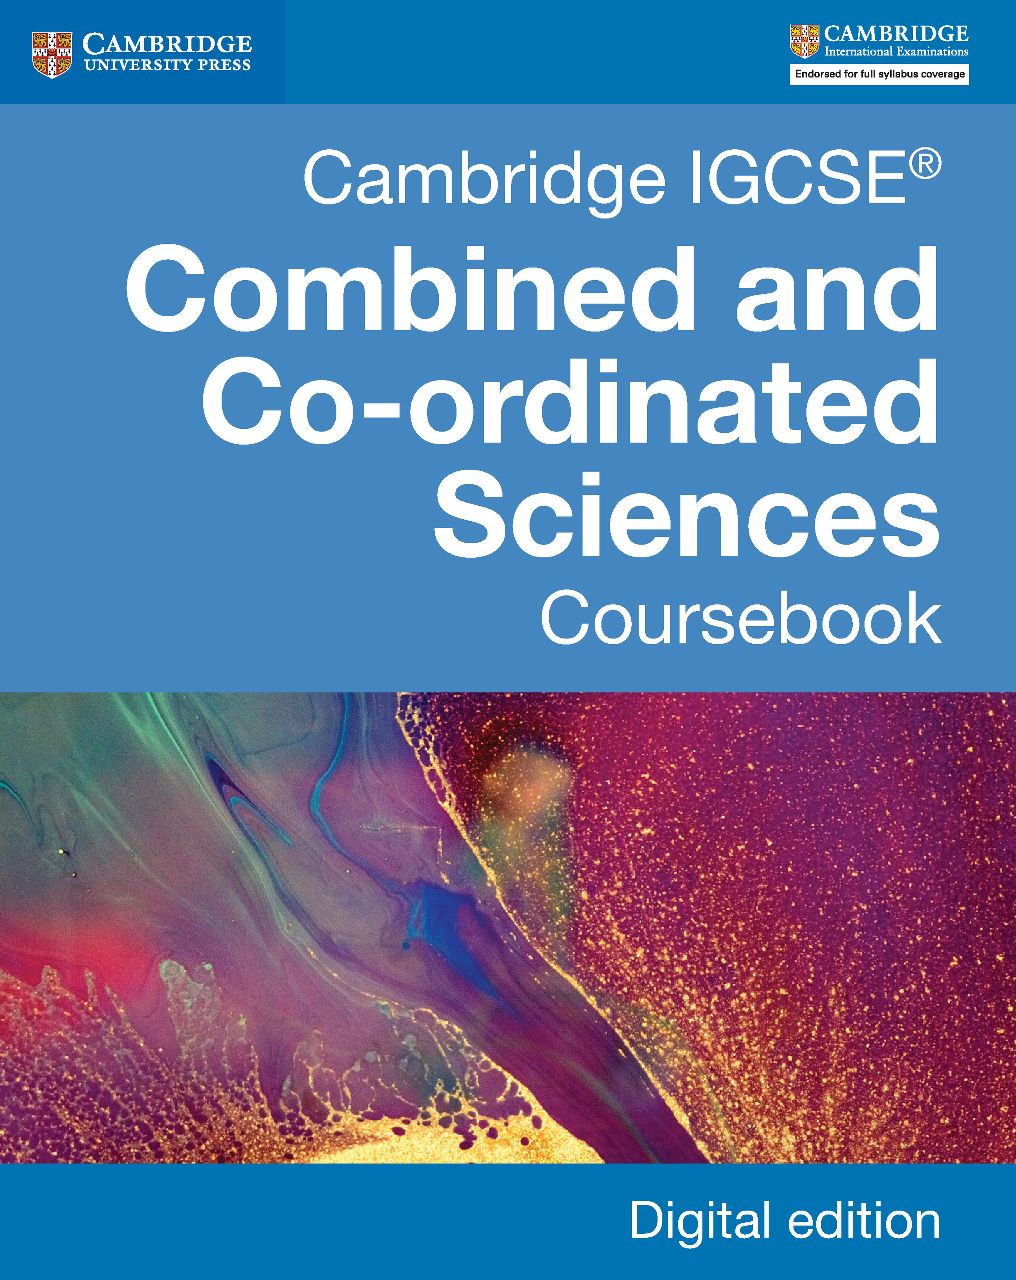 [PDF/ePub] Cambridge IGCSE® Combined and Co-ordinated Sciences Coursebook Digital Edition